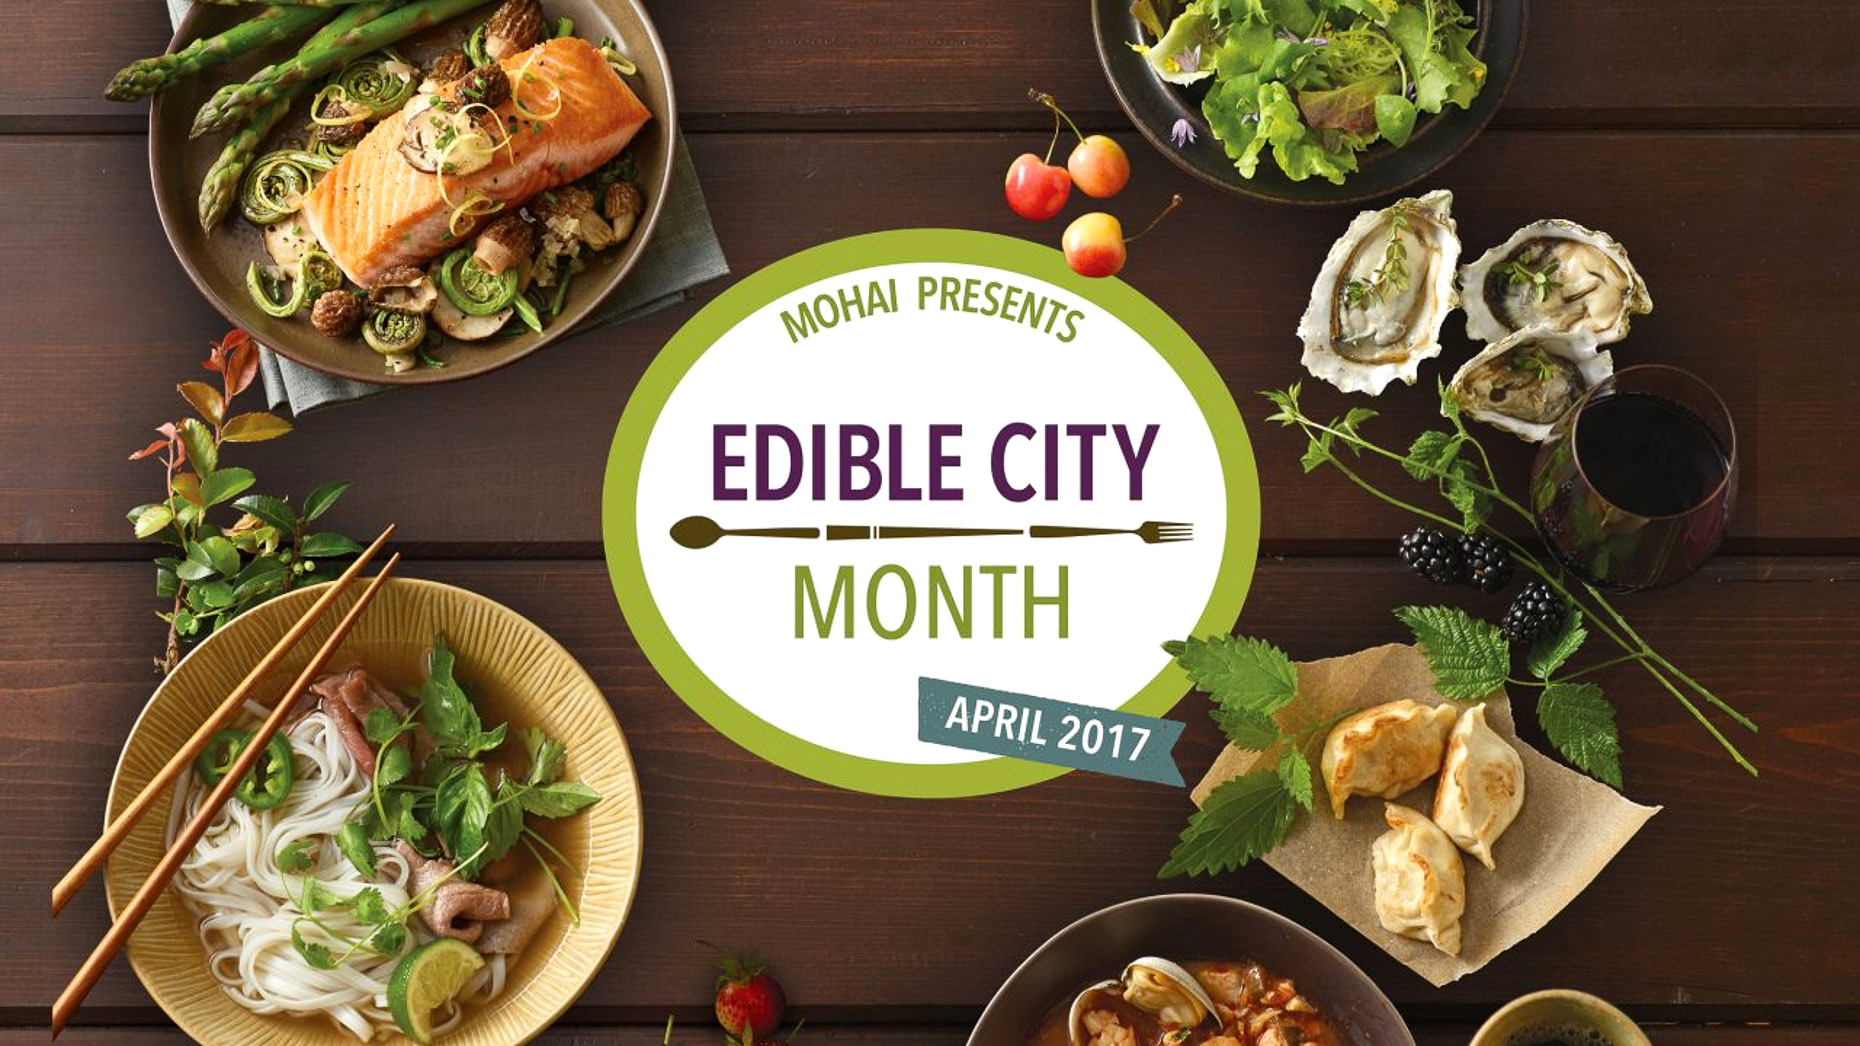 MOHAI edible city seattle advertisement